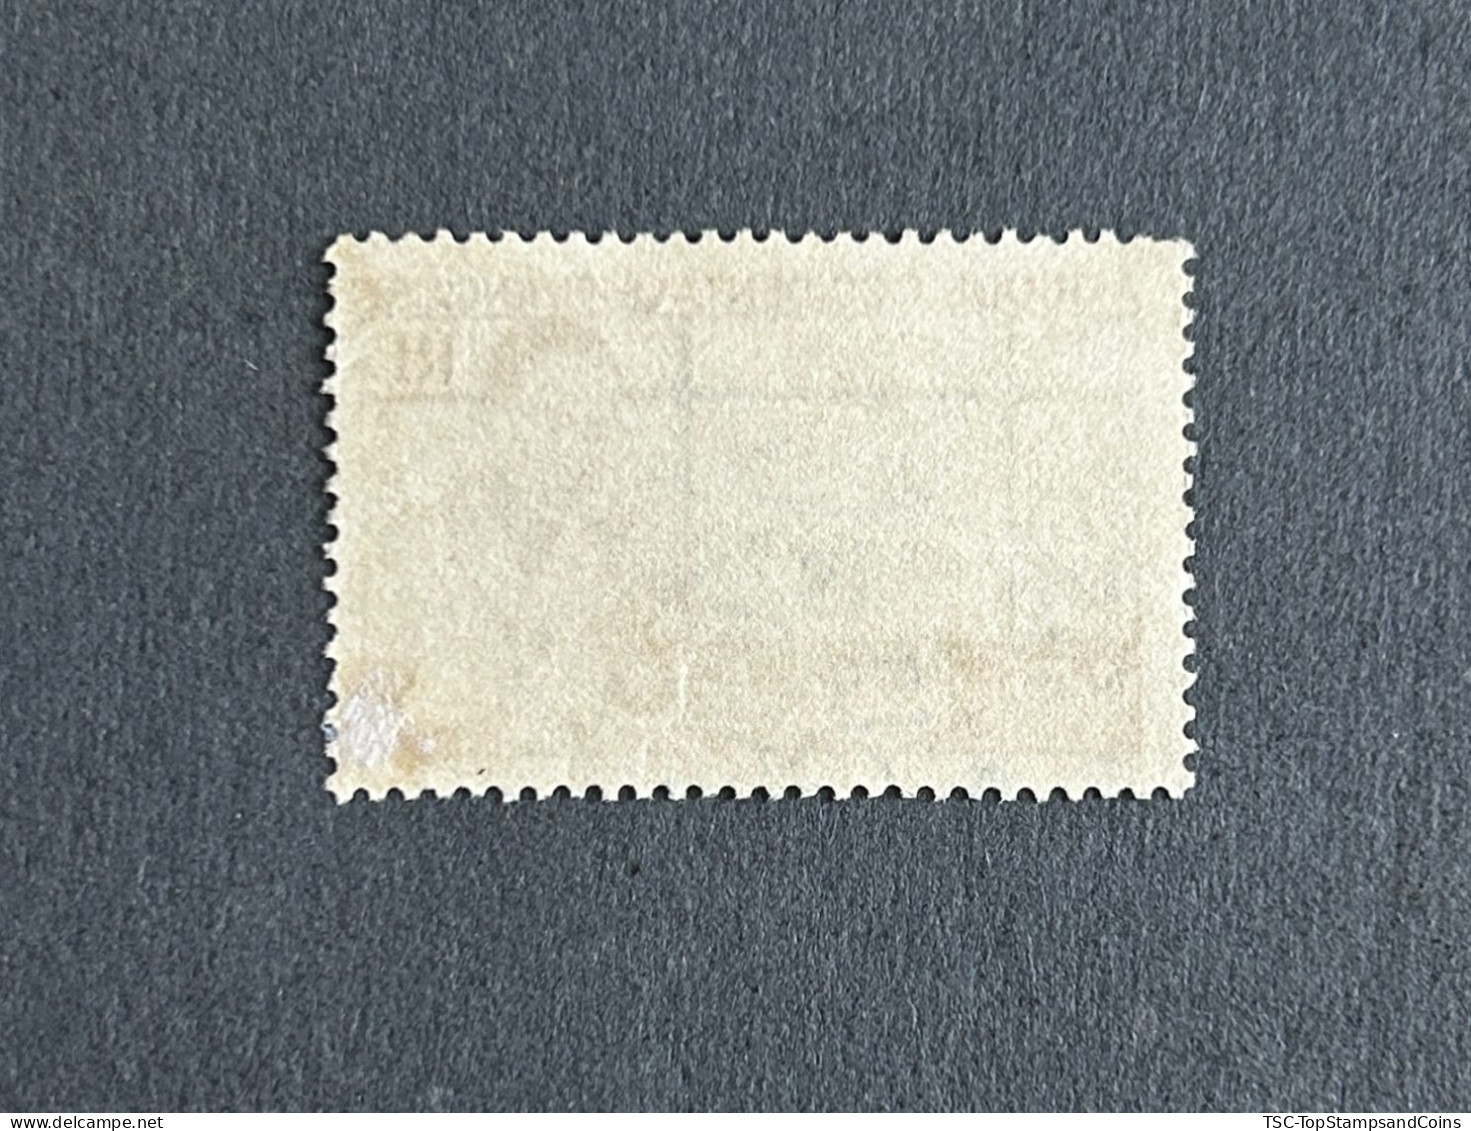 FRAWA0048U3 - Local People - Medical Laboratory - 15 F Used Stamp - AOF - 1953 - Usati